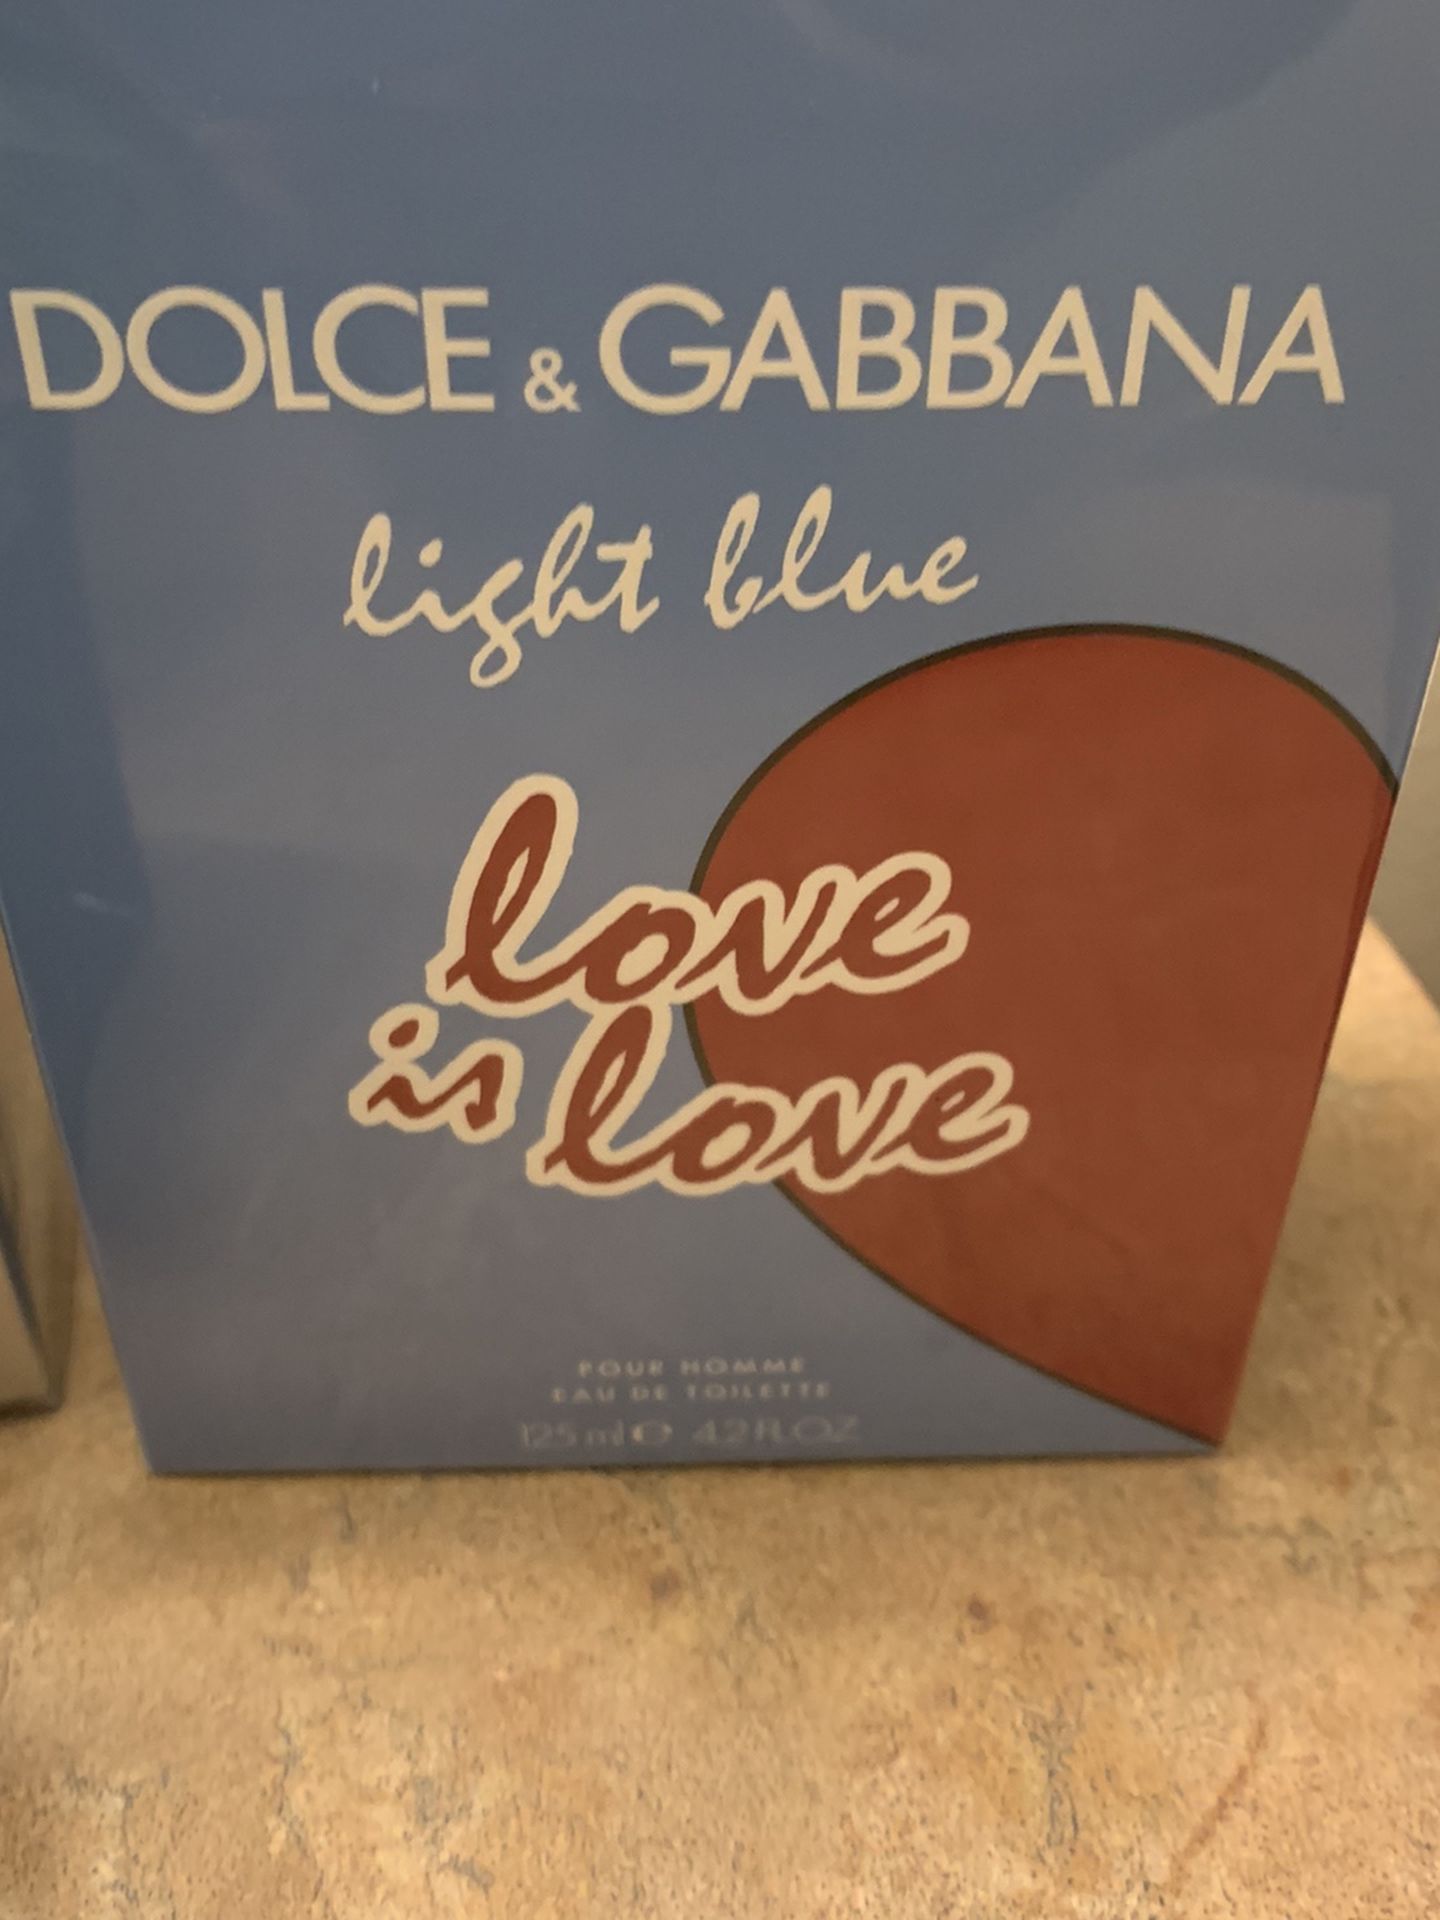 Dolce & Gabbana Light Blue Love Is Love Cologne 4.2 oz fragrance